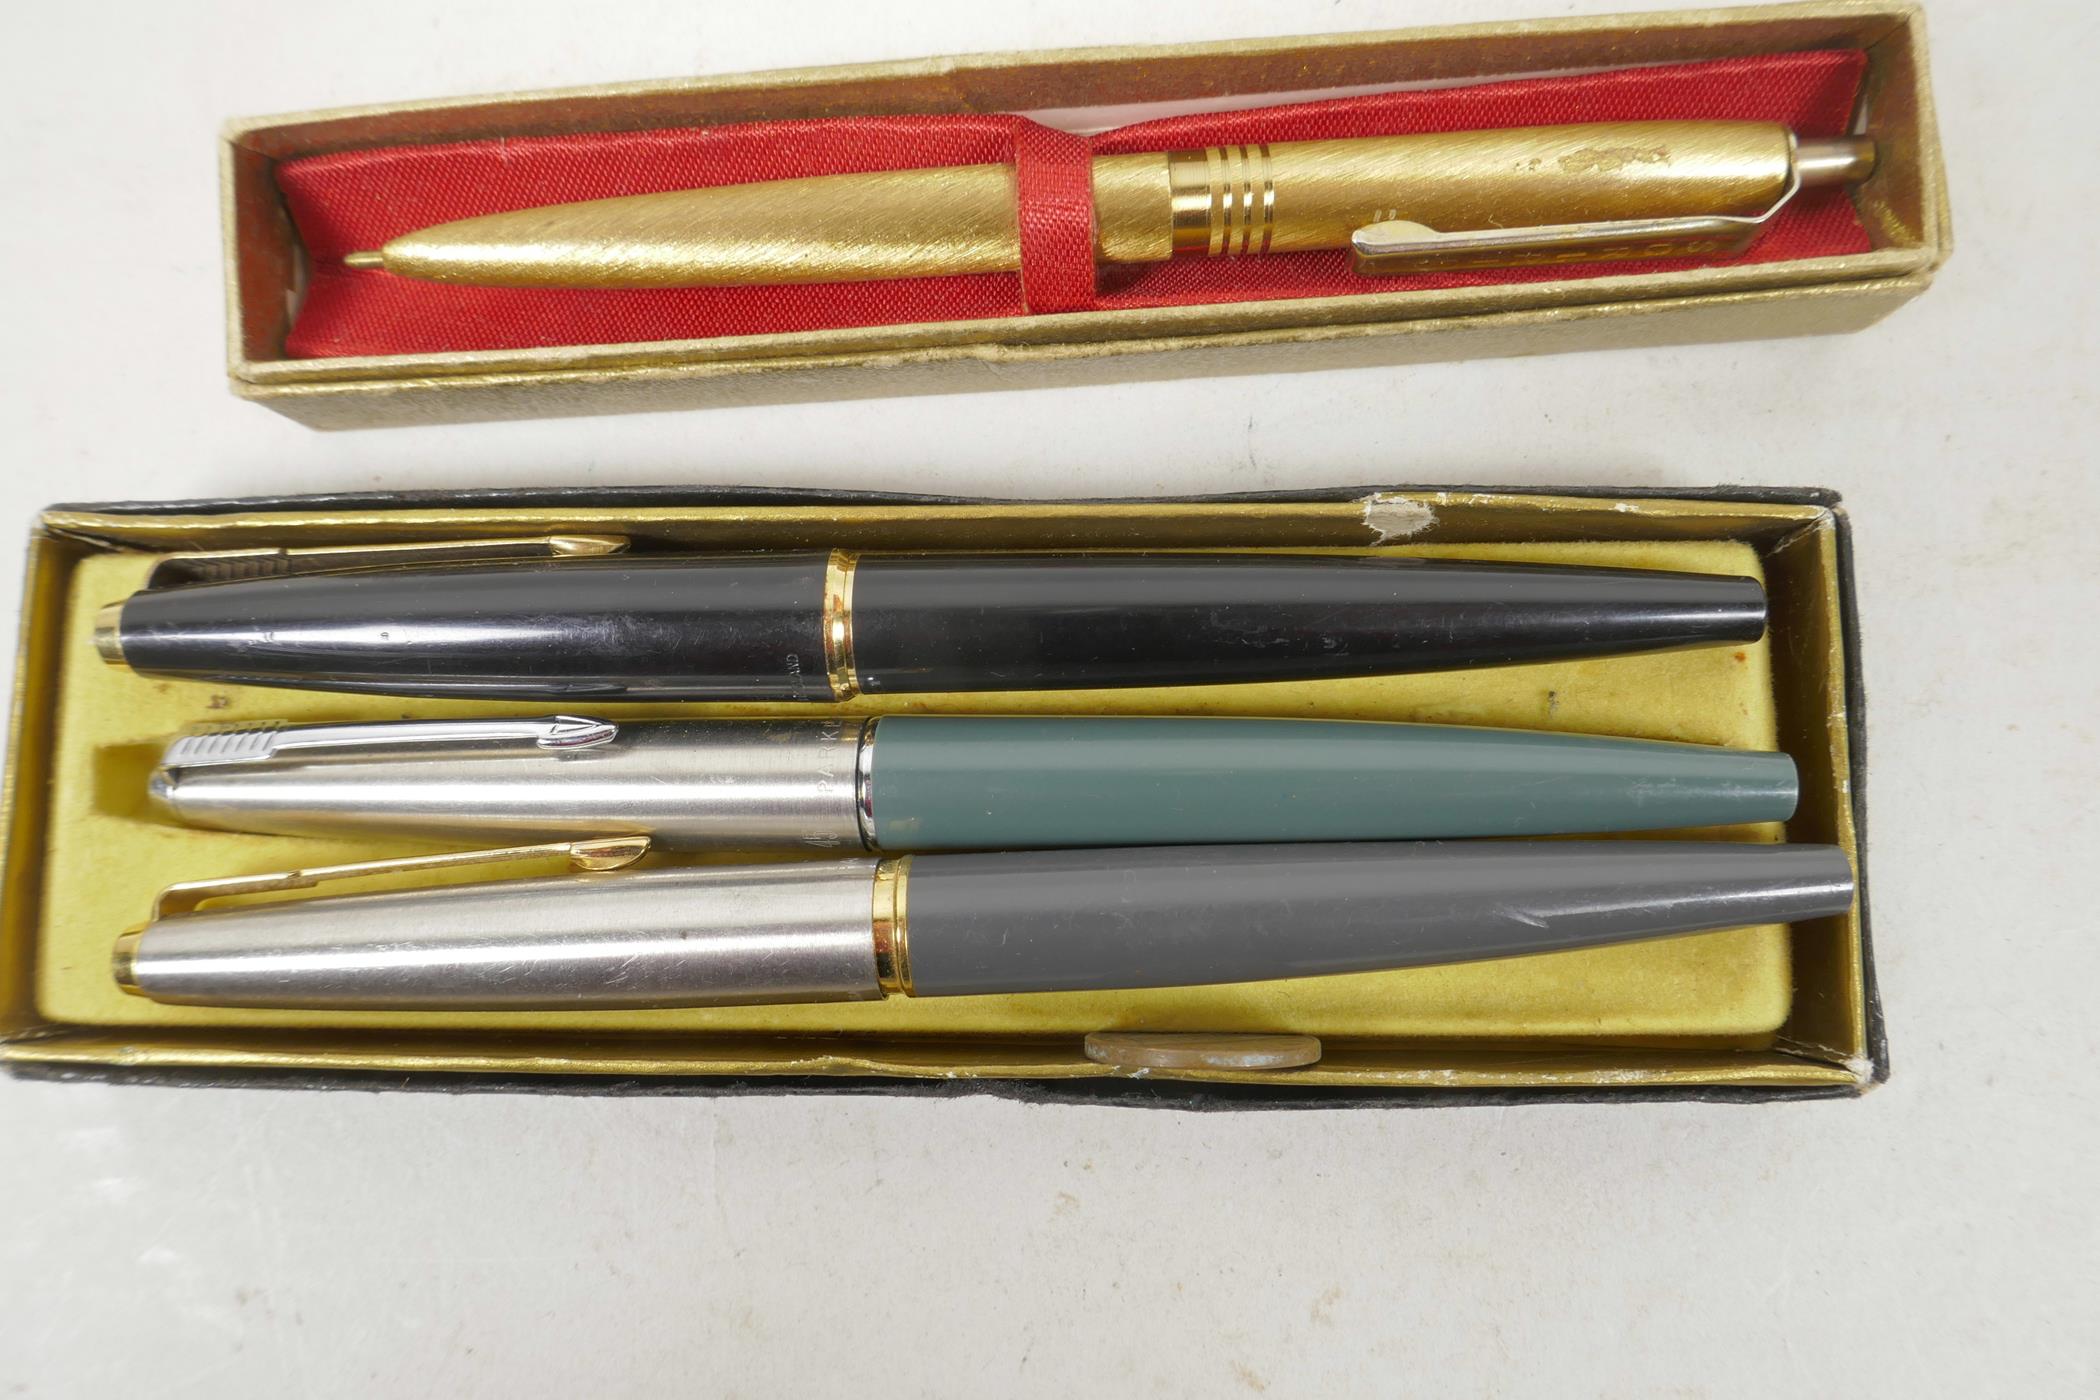 Three Parker fountain pens and a Scripto golden ball point pen